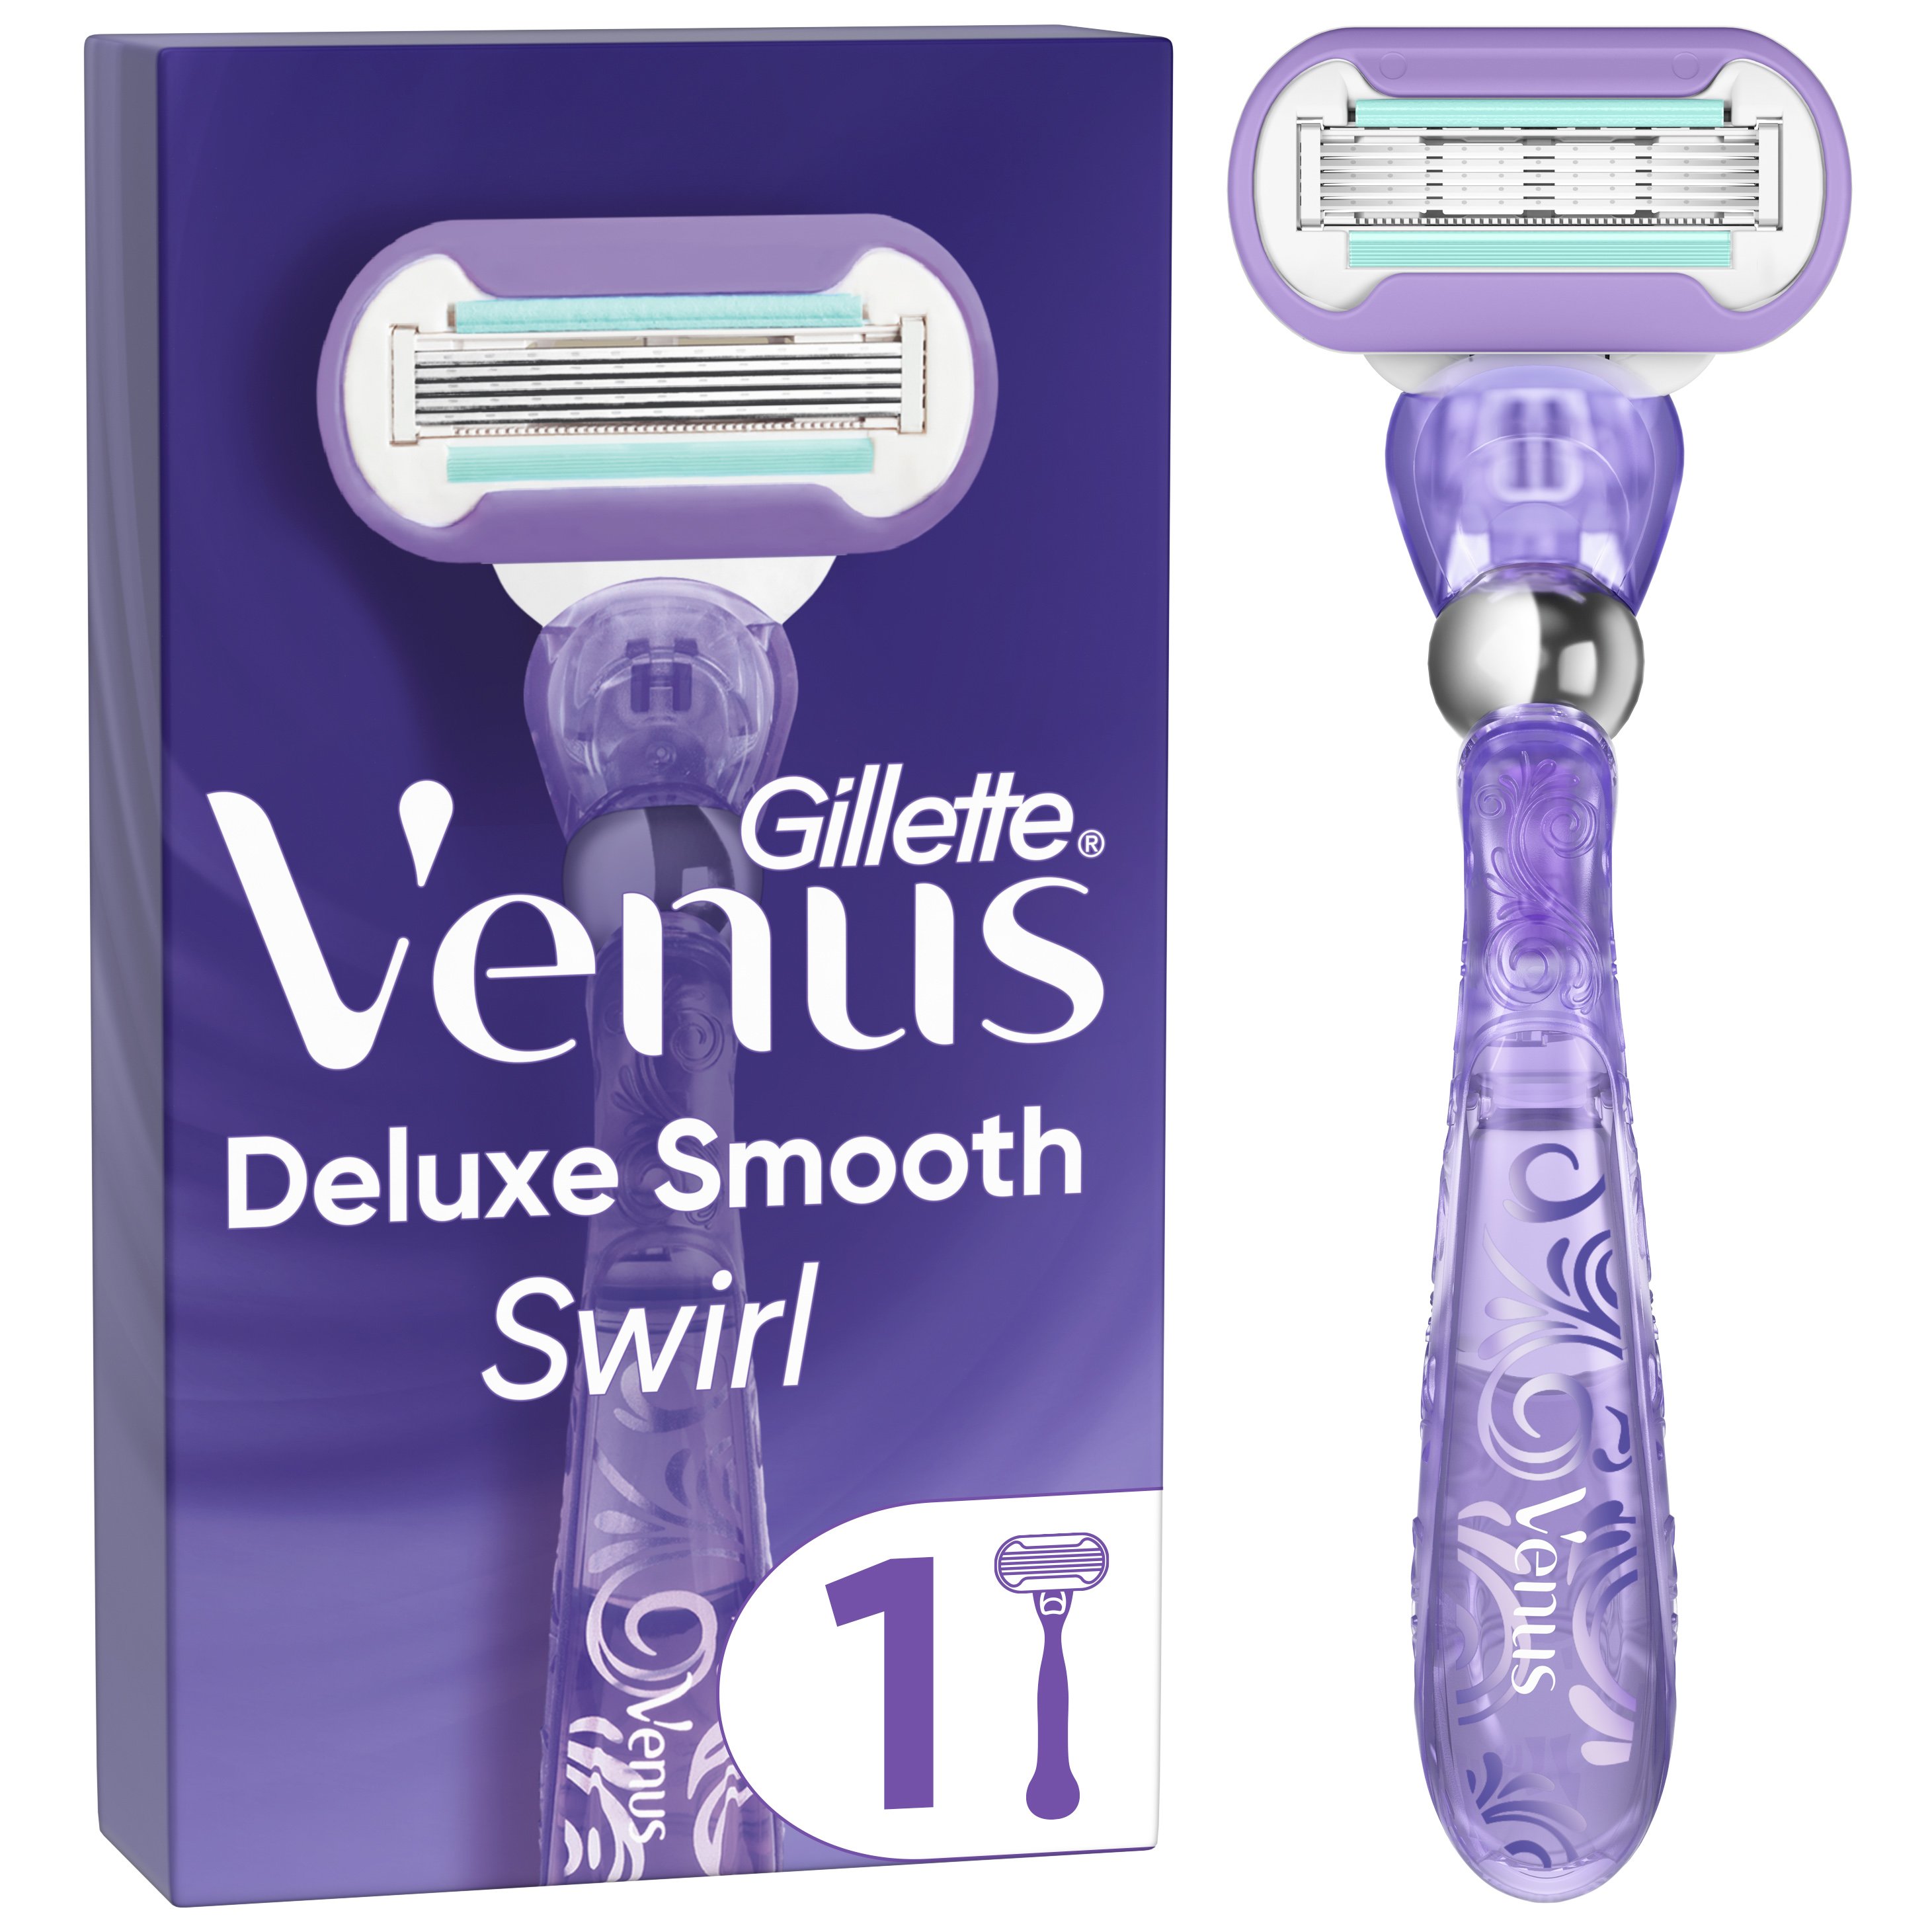 Gillette Venus Deluxe Smooth Swirl Flexi Ball Γυναικεία Ξυριστική Μηχανή με 5 Λεπίδες & Επίστρωση Diamond για Επιπλέον Απαλότητα 1 Μηχανή & 1 Ανταλλακτικό 47502